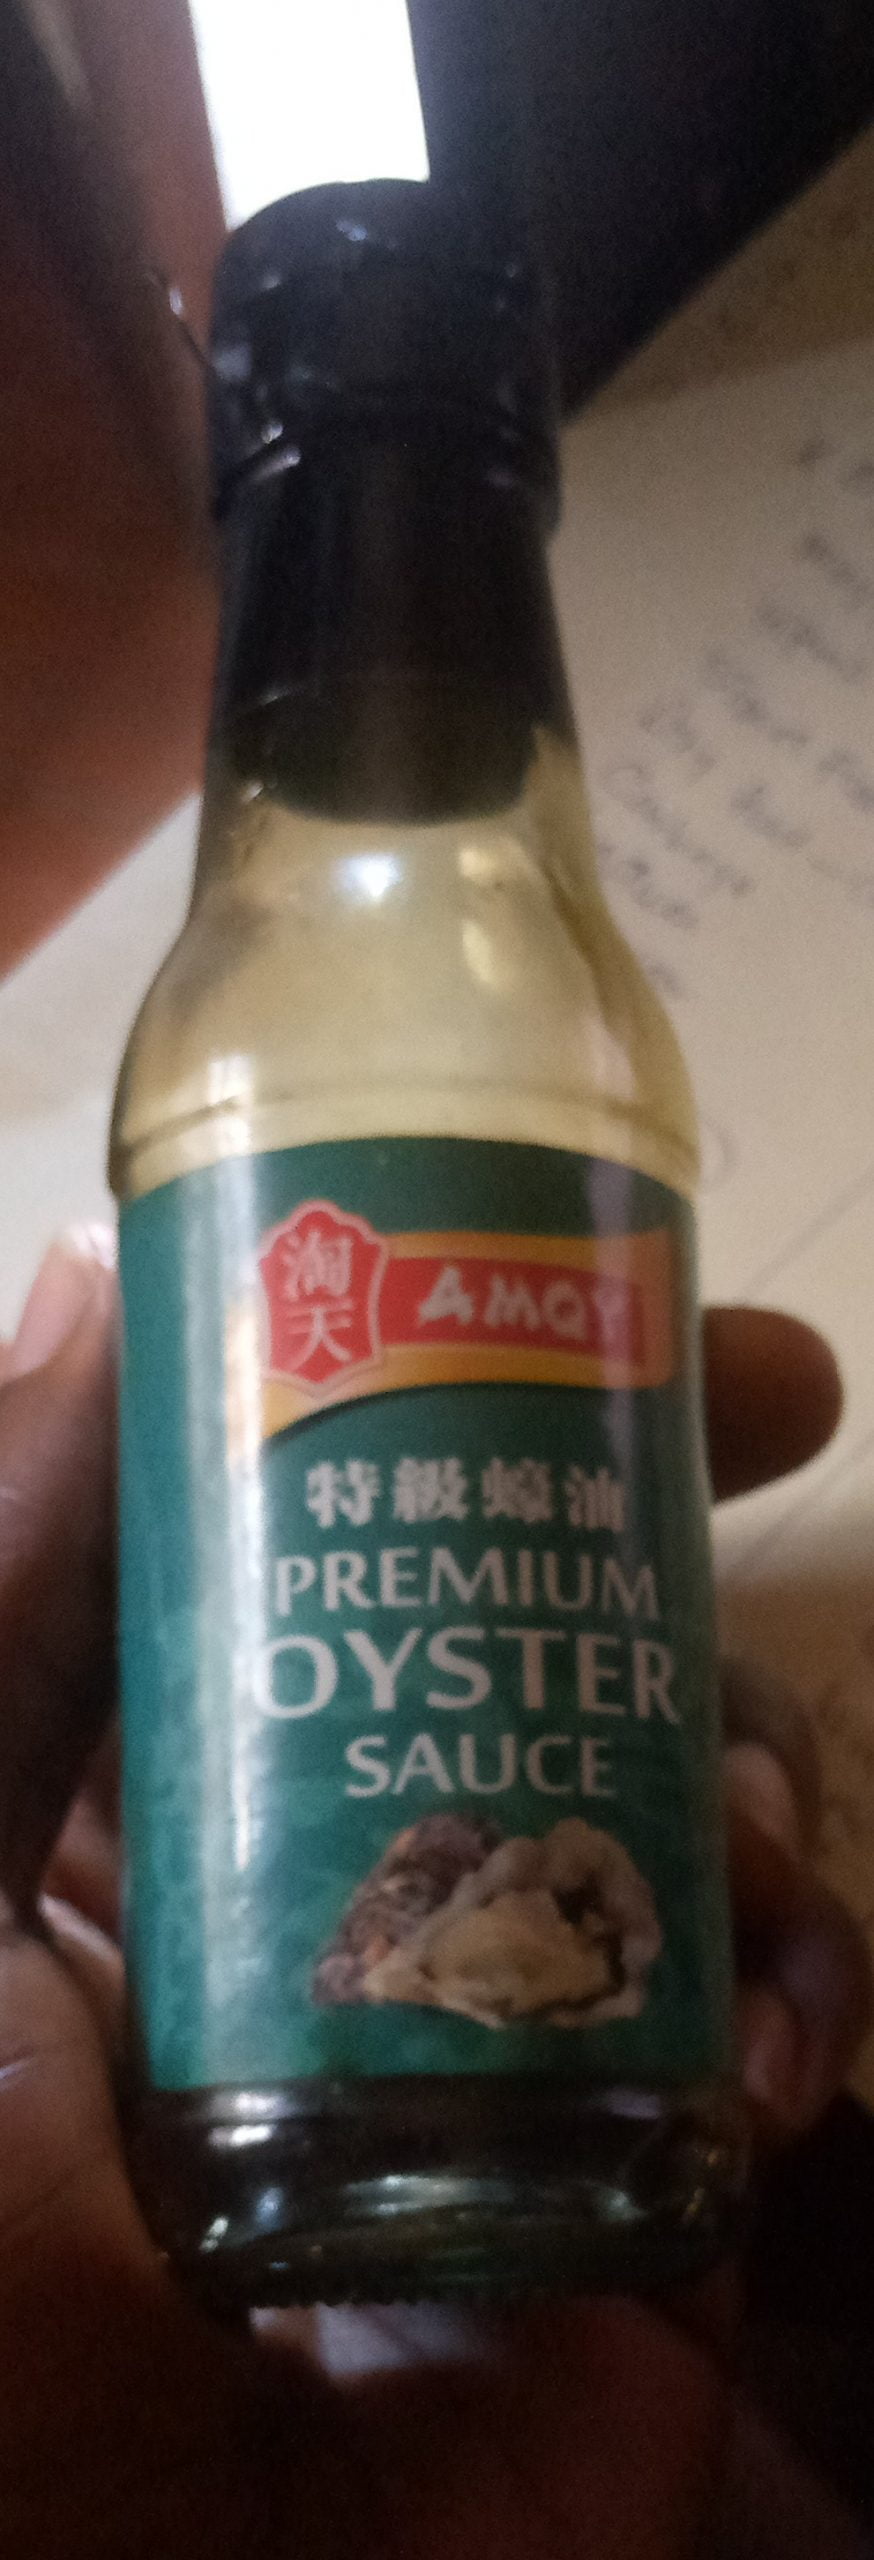 Premium Oyster Sauce (750g)